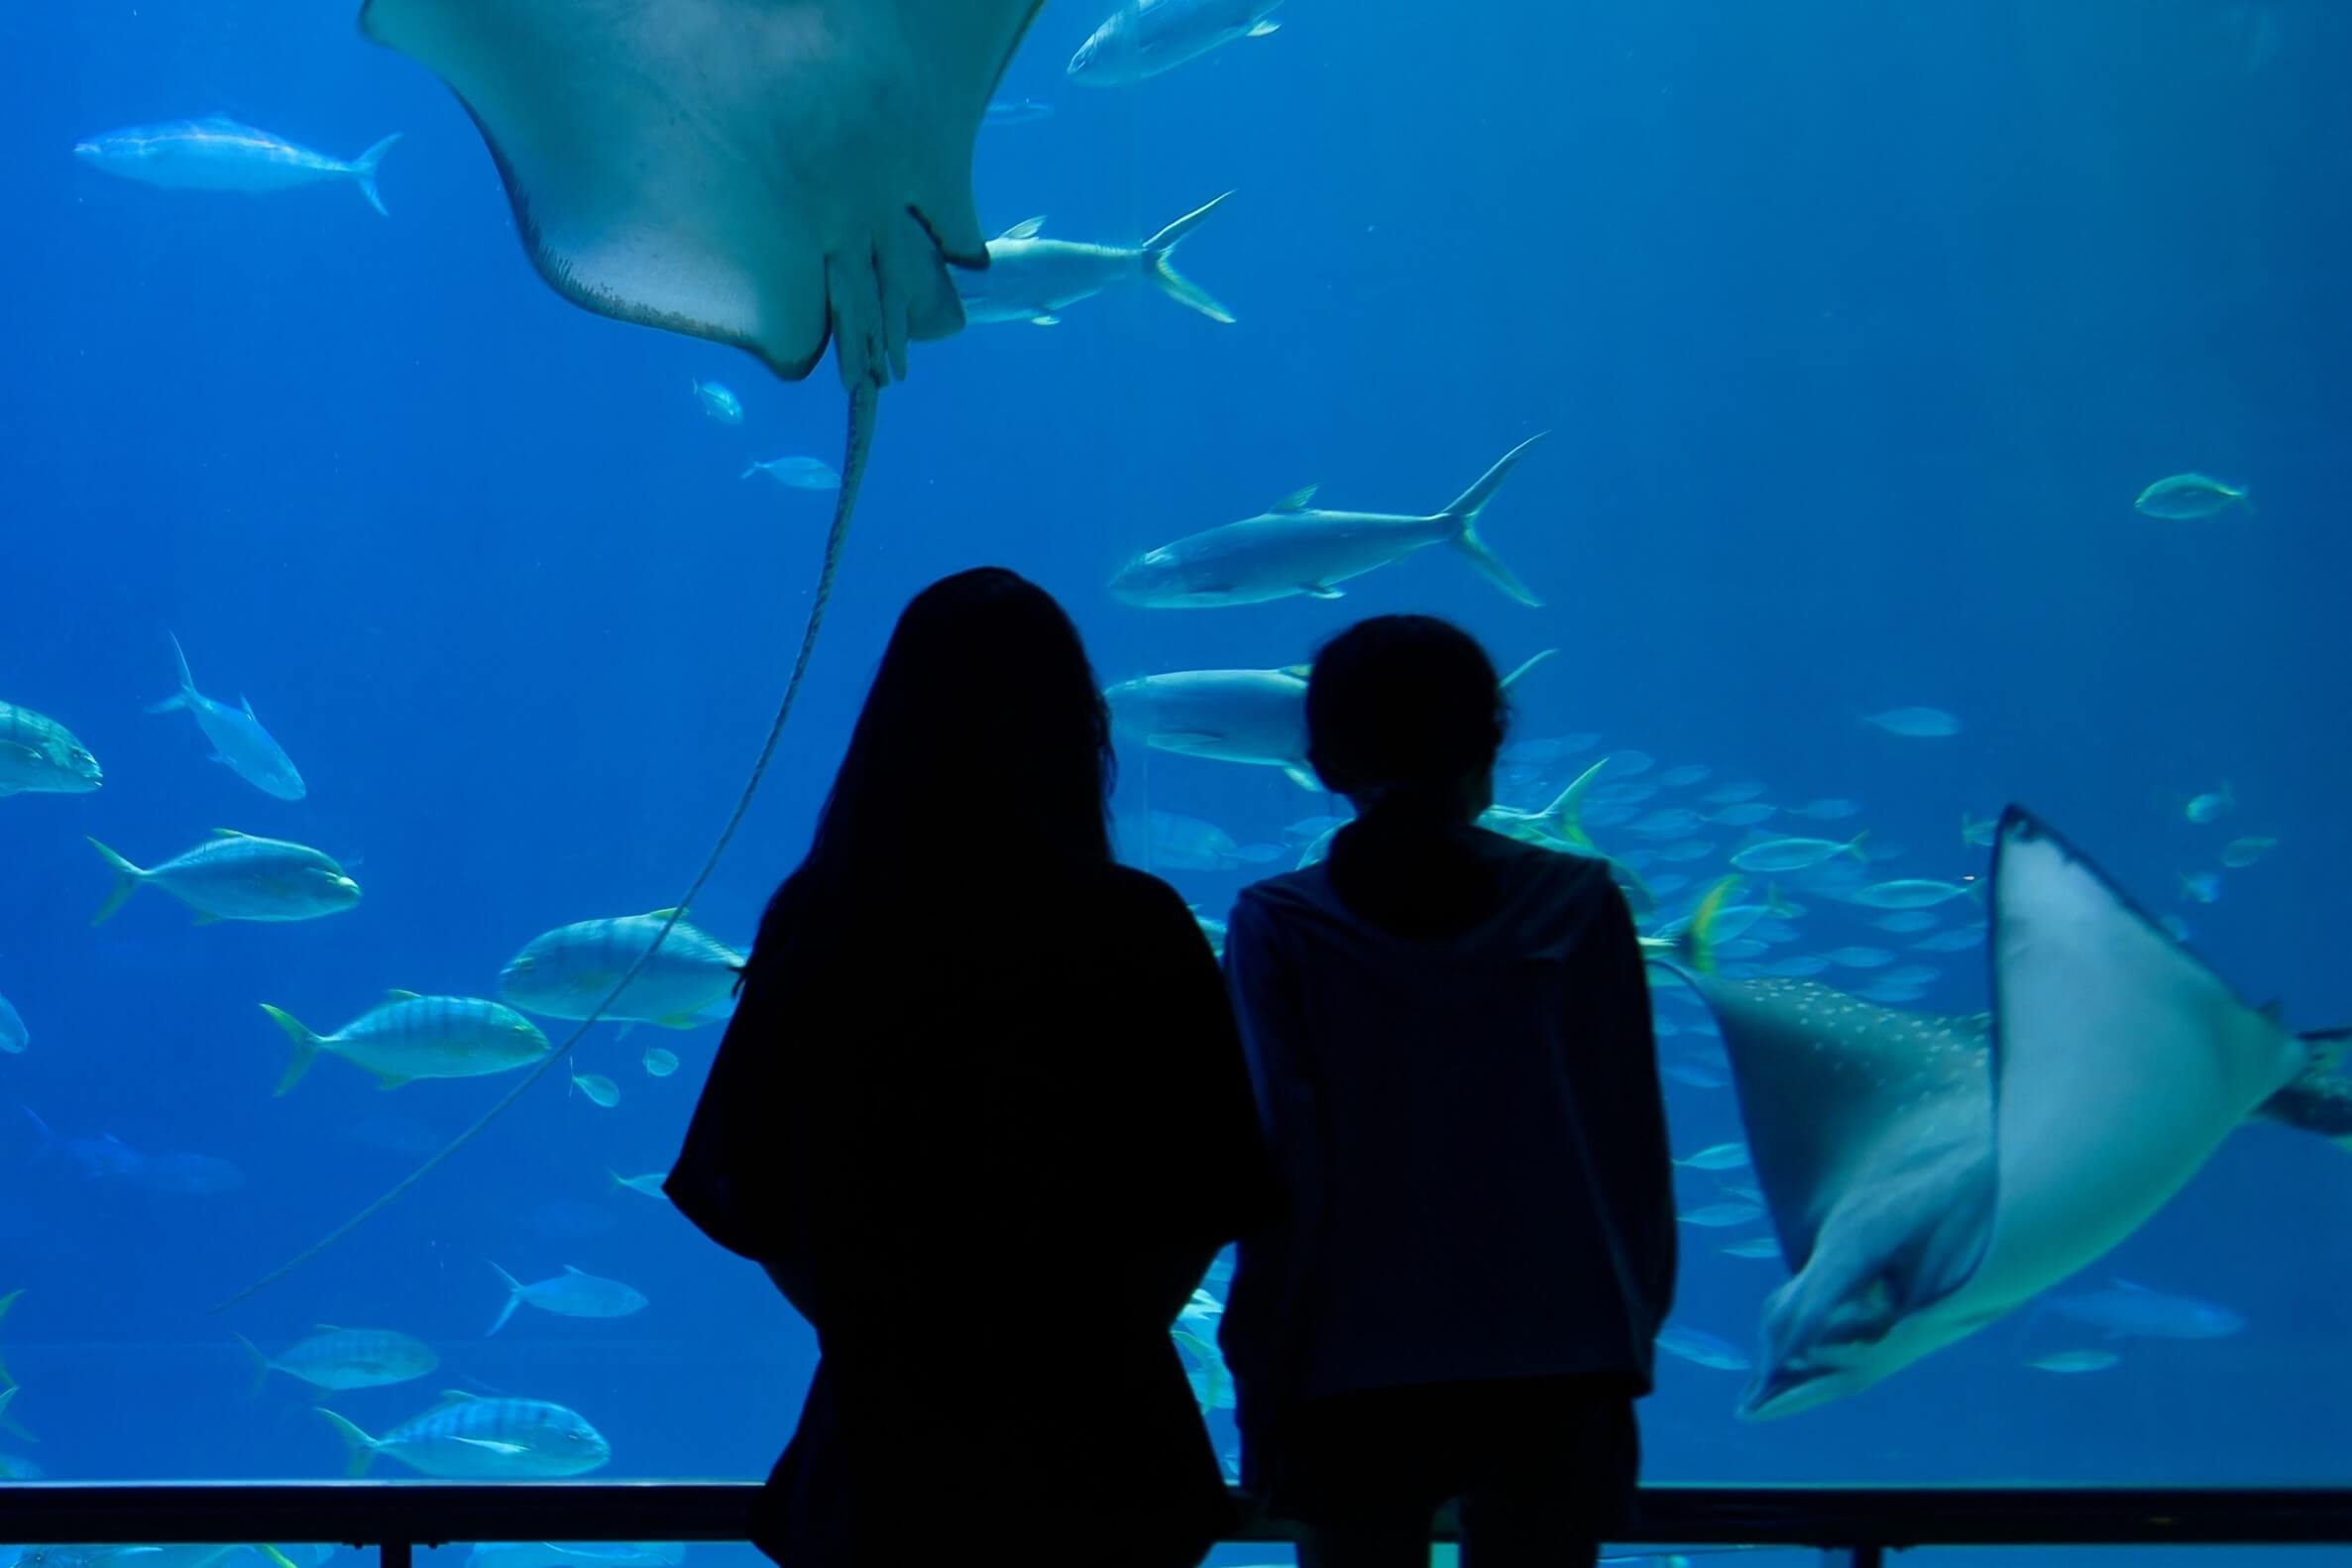 Two people at The Aquarium in Austin.